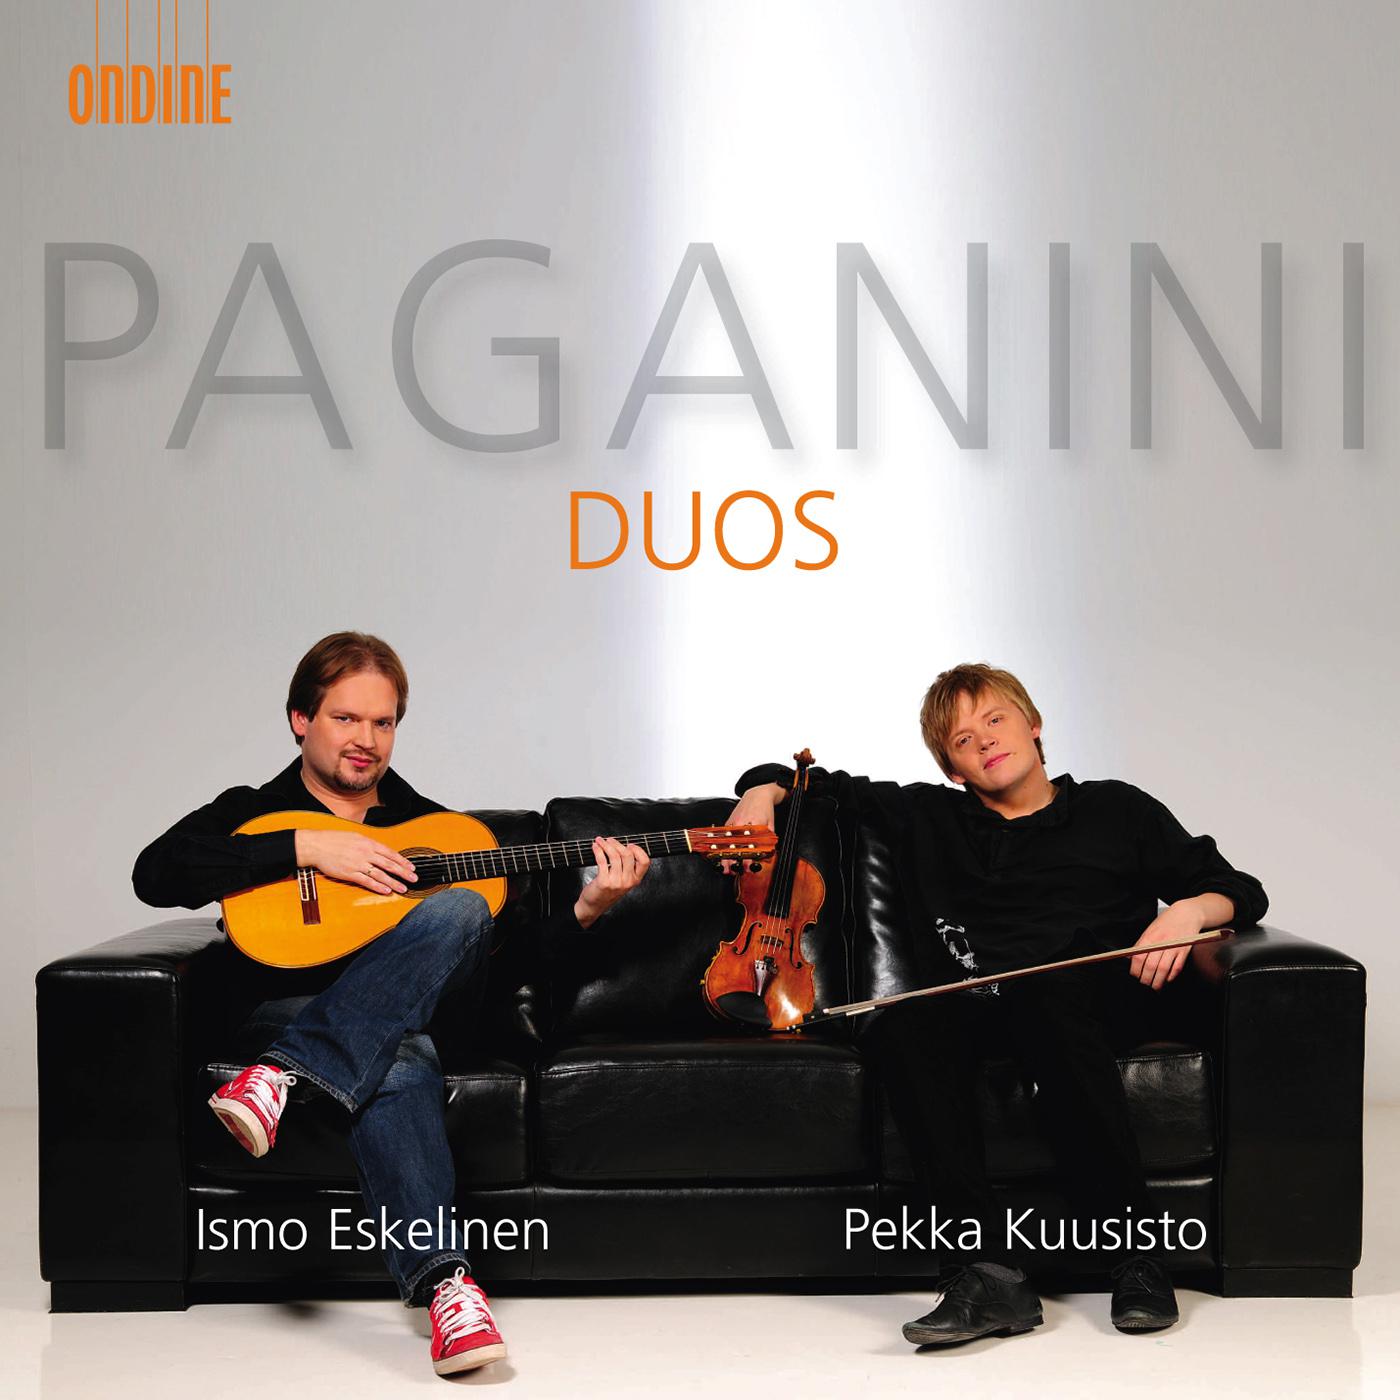 Pekka Kuusisto - Sonata for Violin and Guitar in E Minor, Op. 3, No. 6, MS 27:I. Andante innocentemente